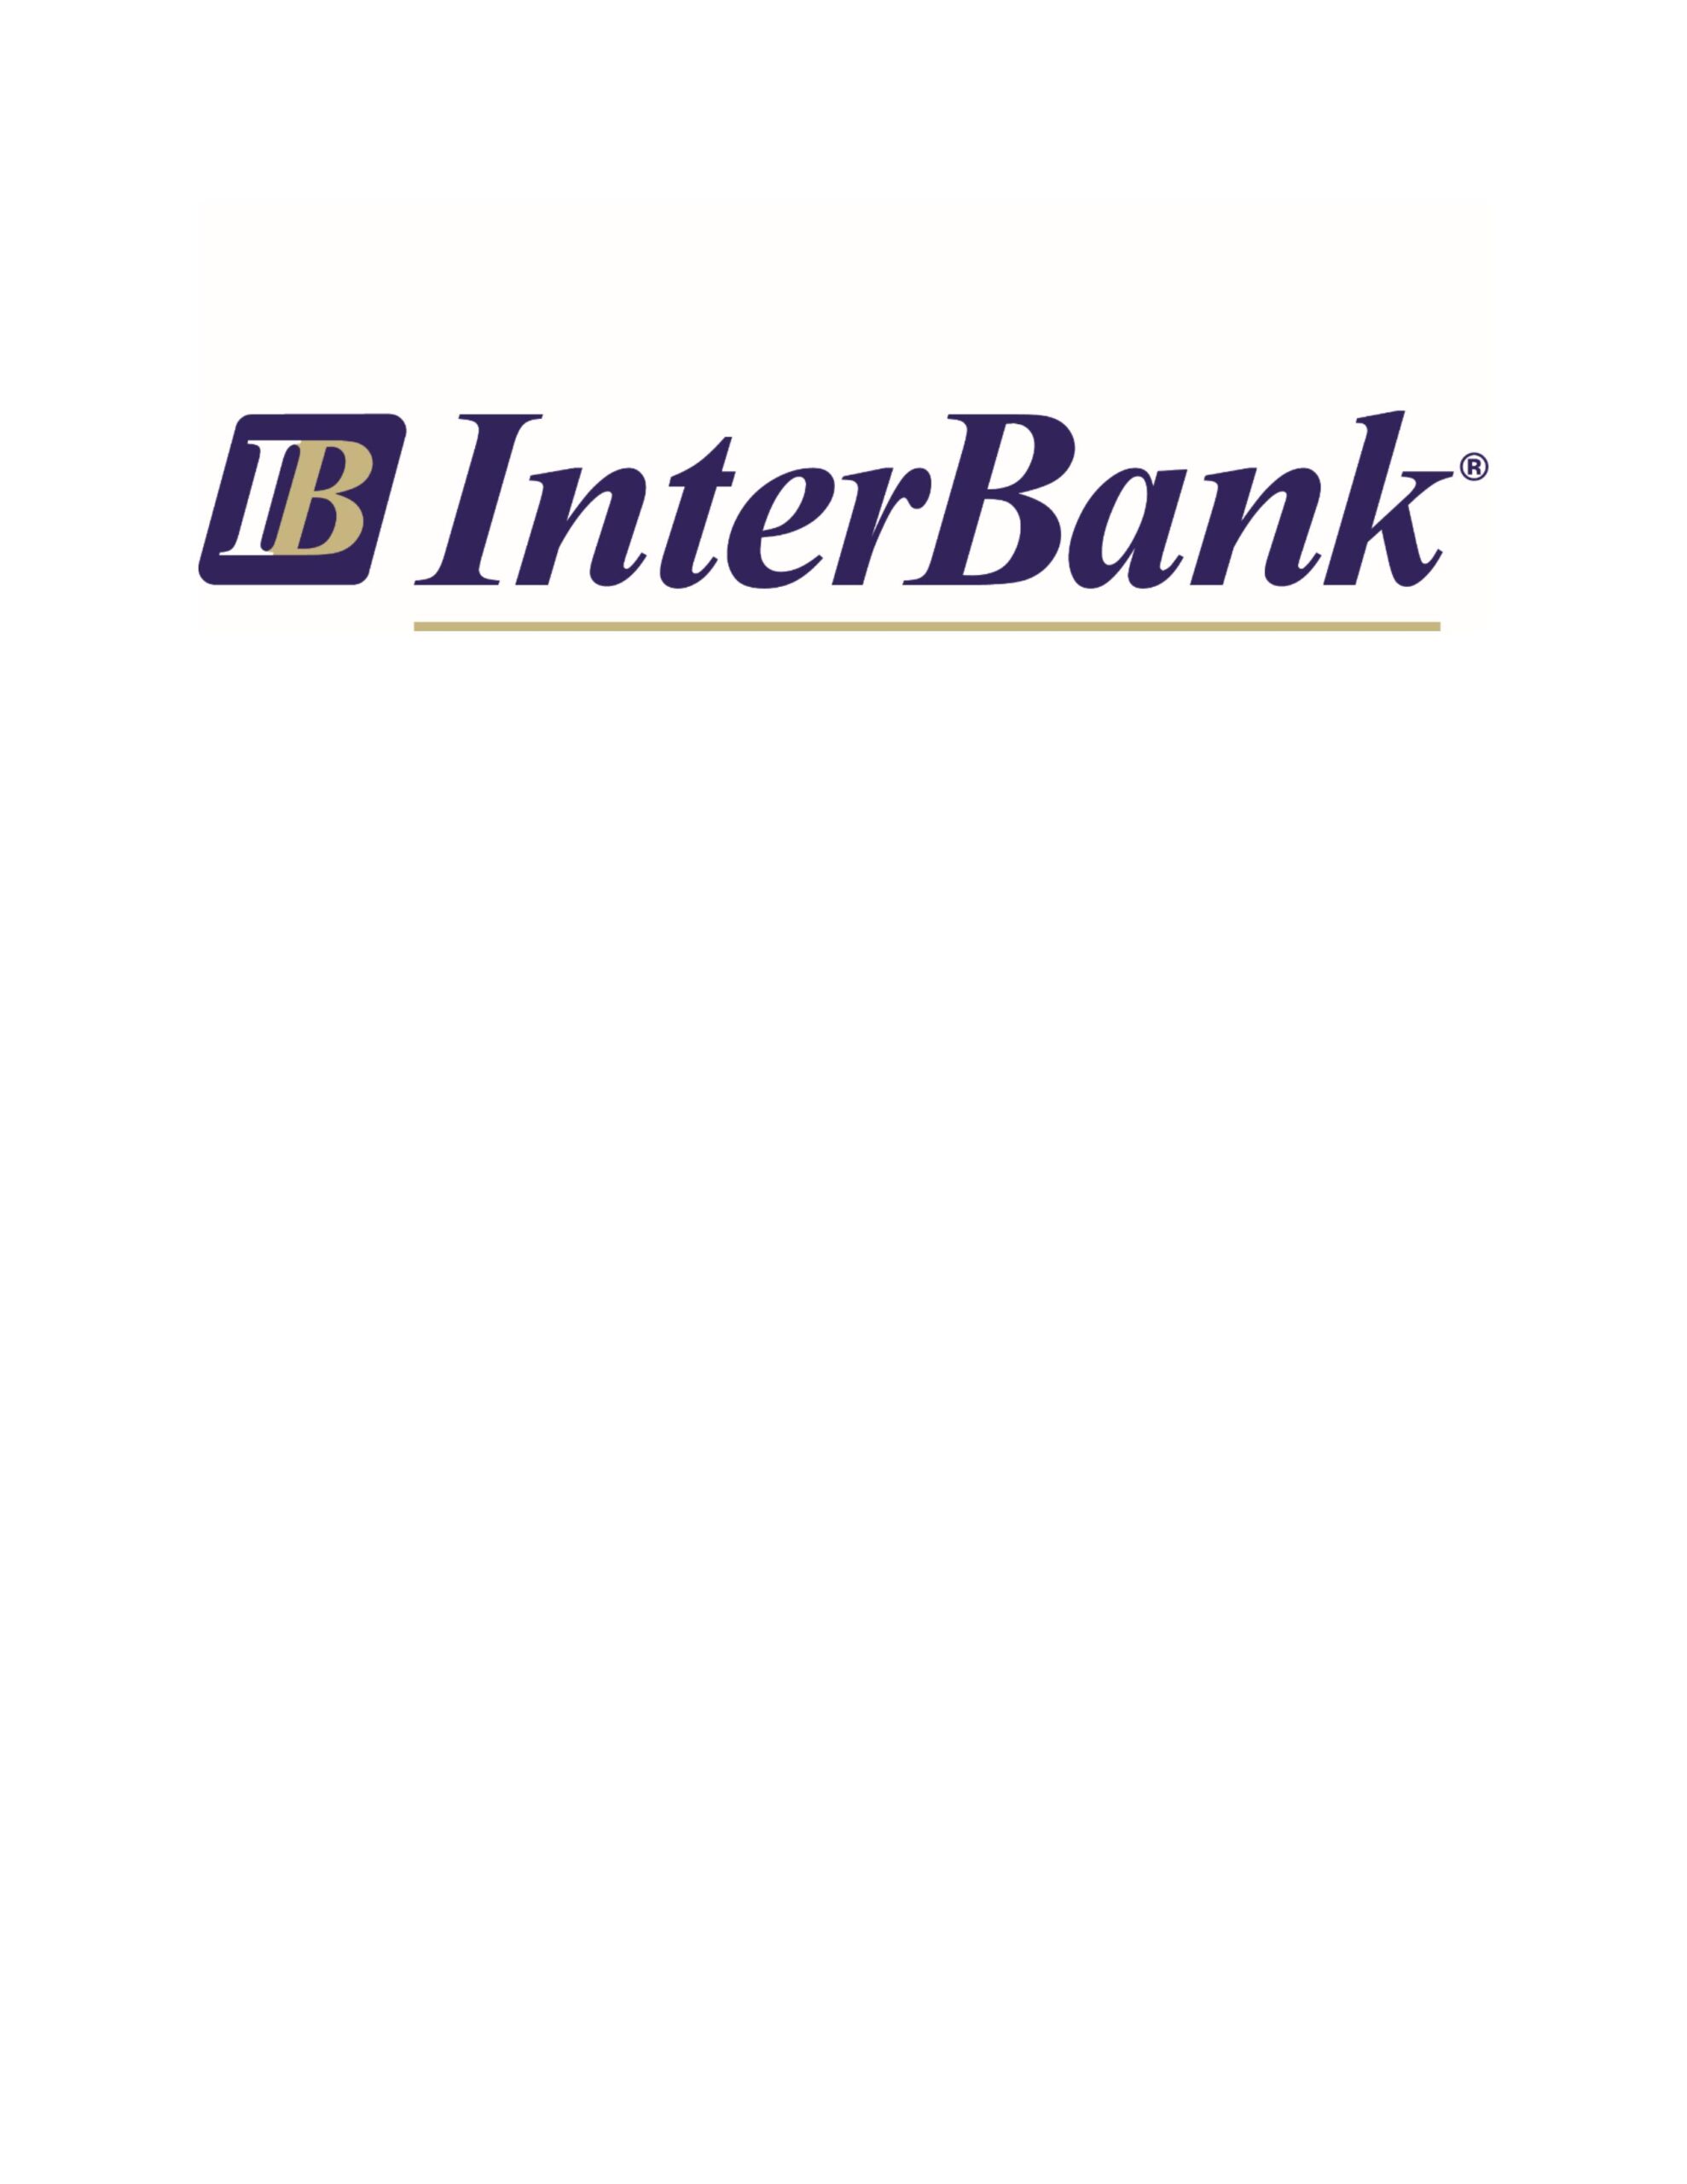 Interbank-logo-scaled.jpg